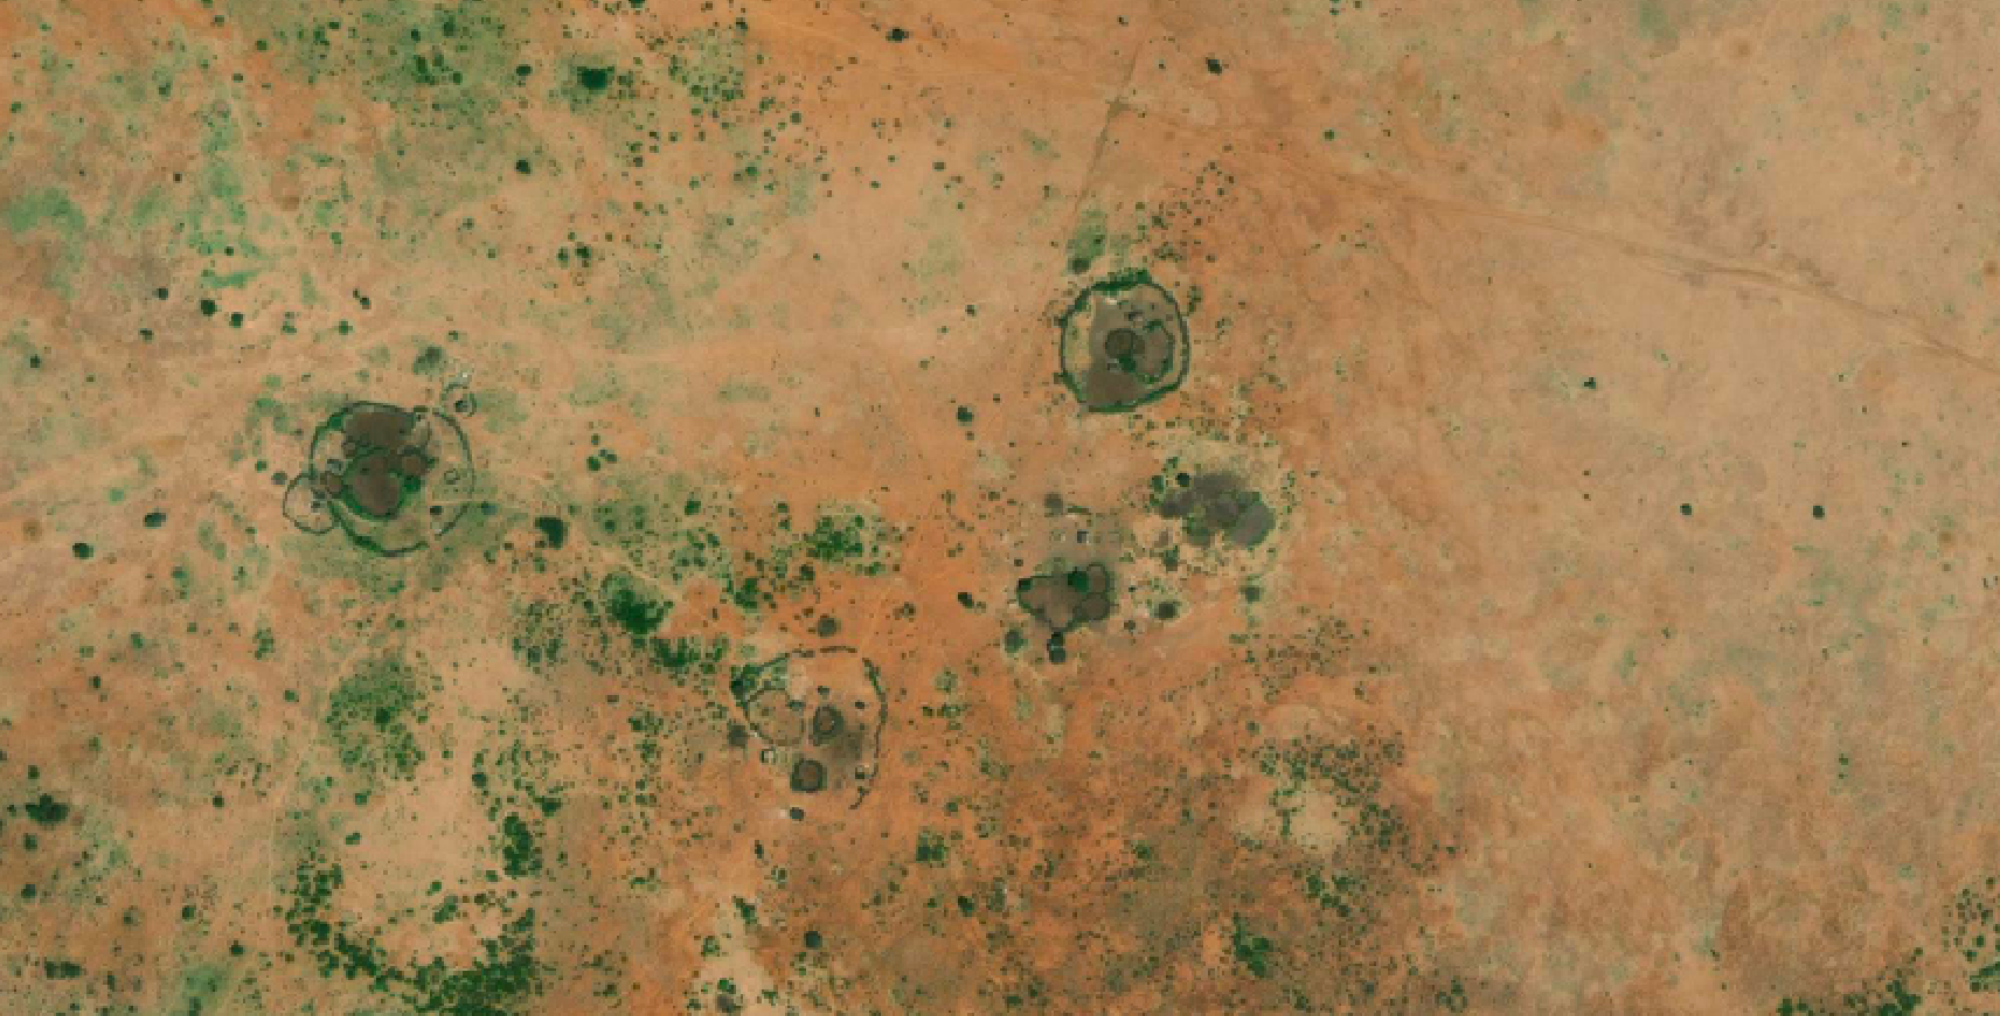 Satellite image of rural Kenya